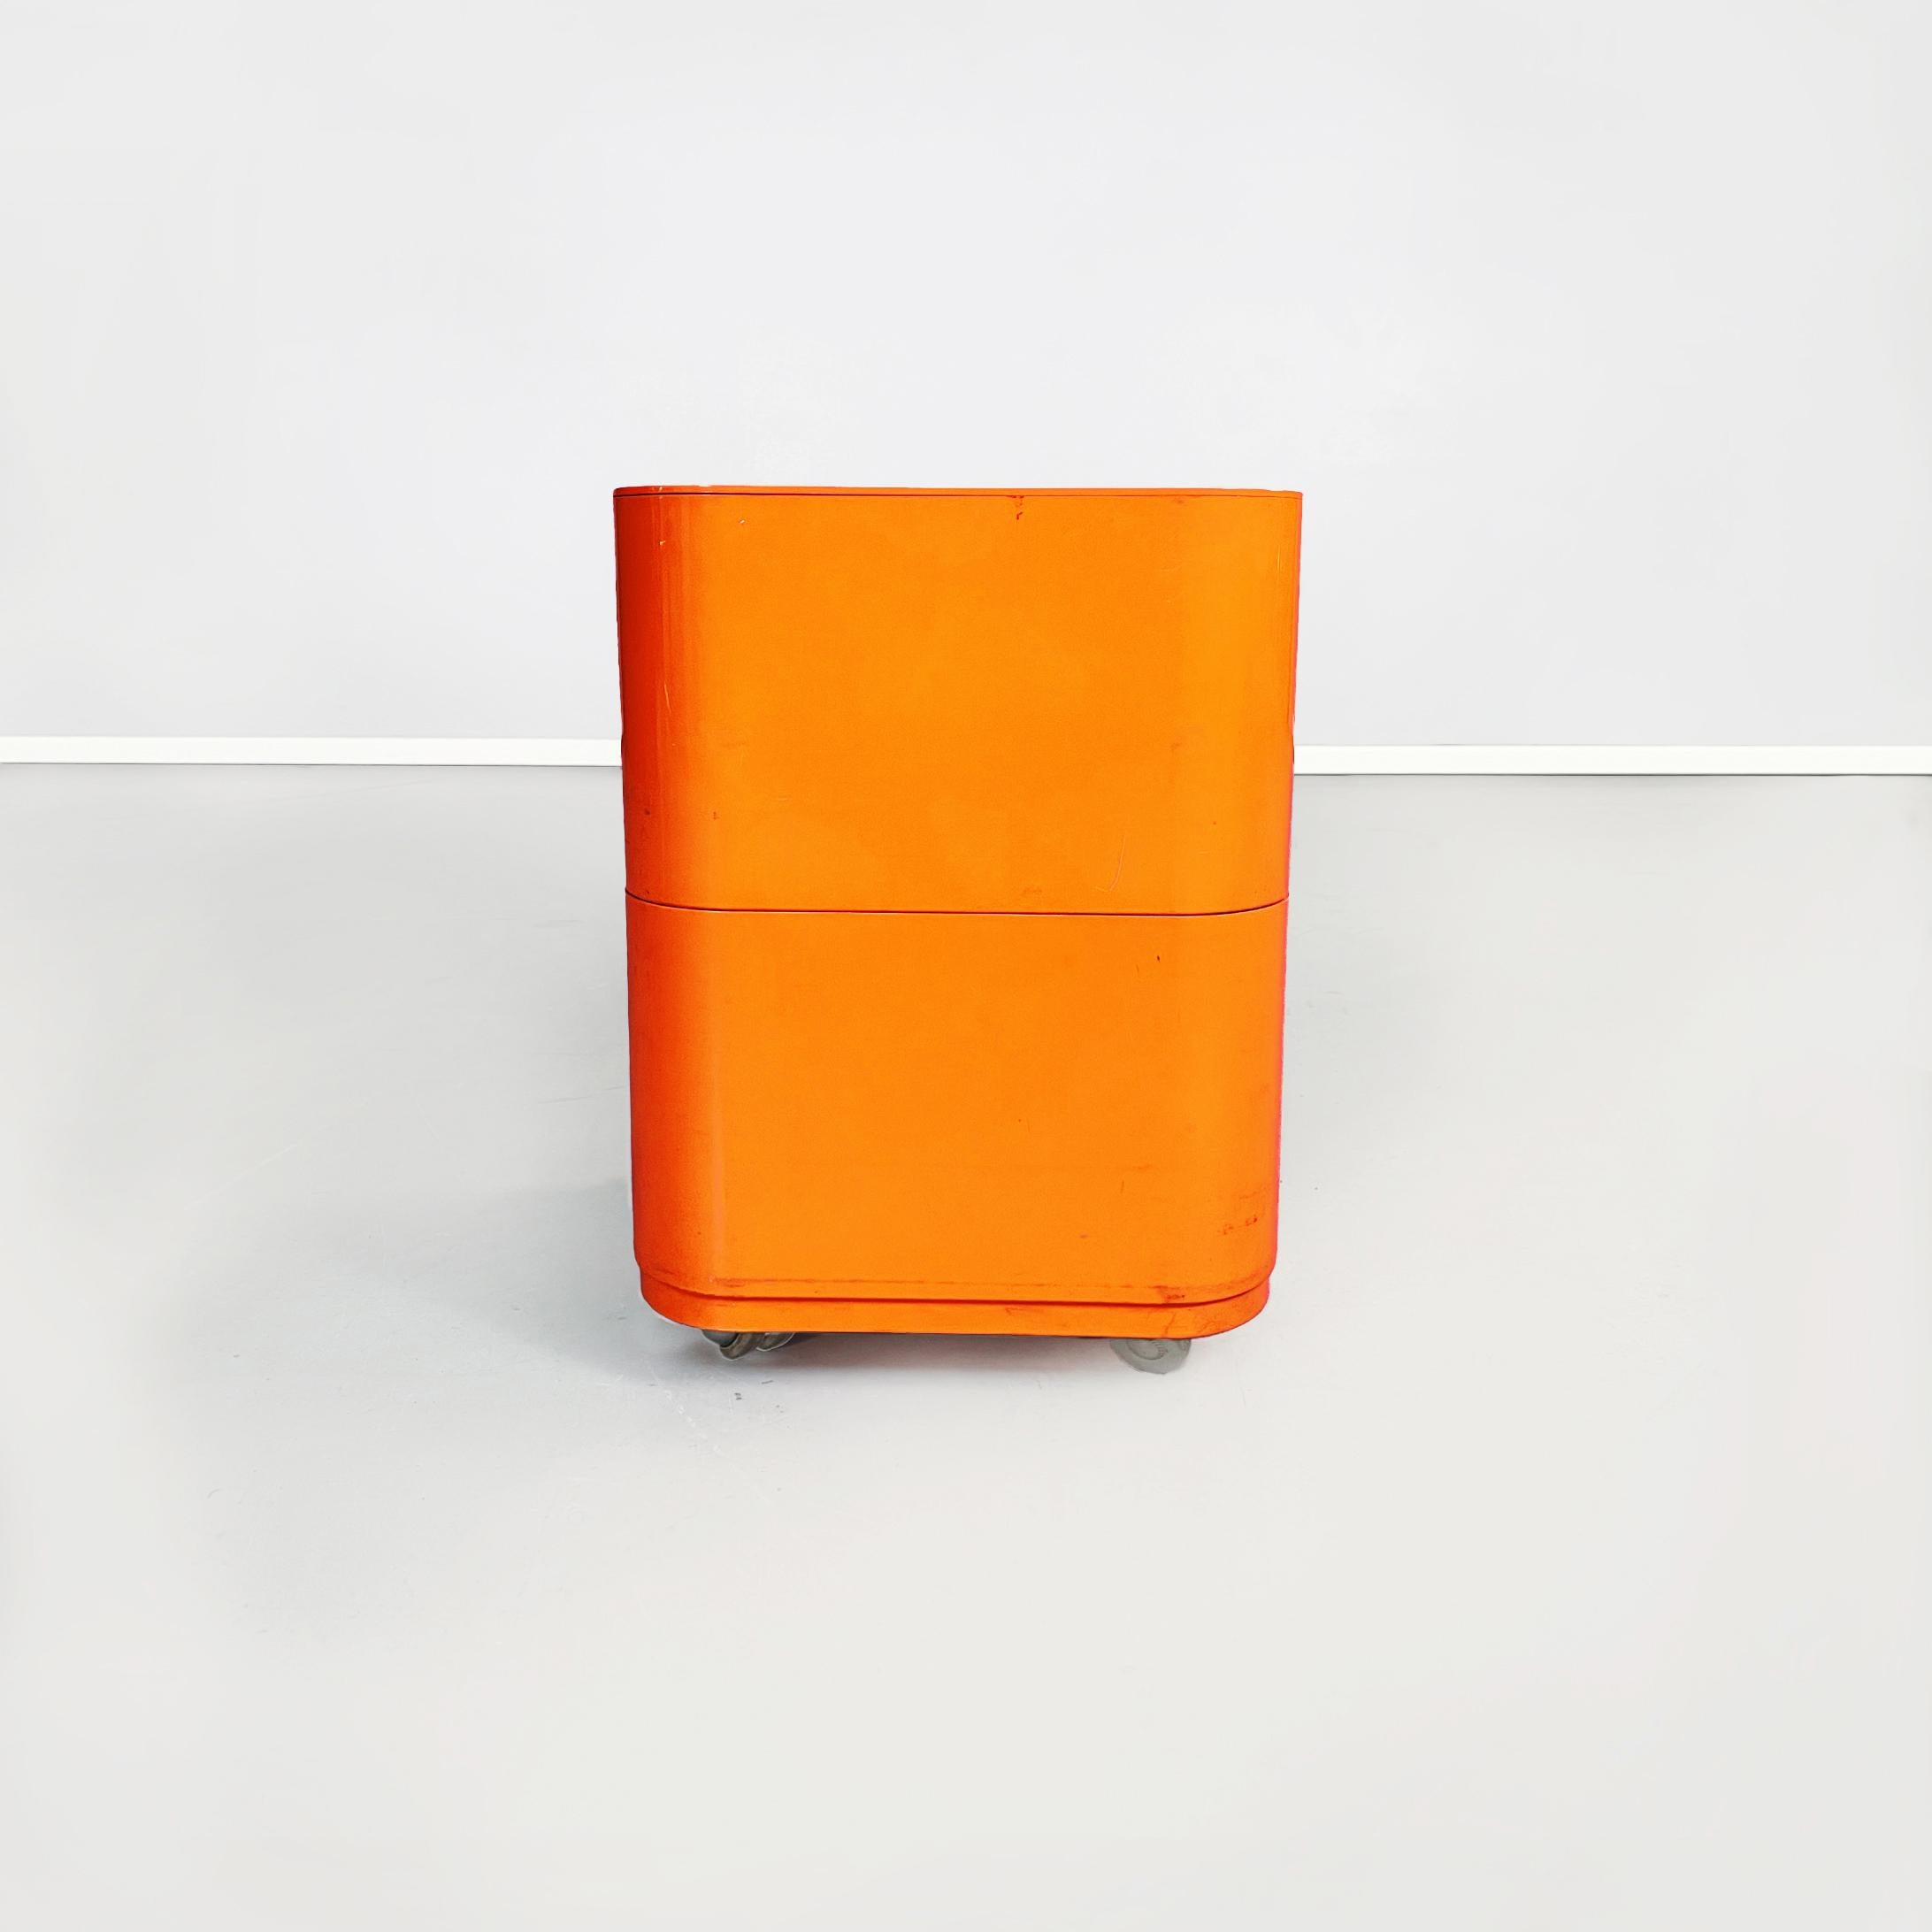 Mid-Century Modern Italian Midcentury Orange Plastic Chest of Drawers by Castelli for Kartell, 1970